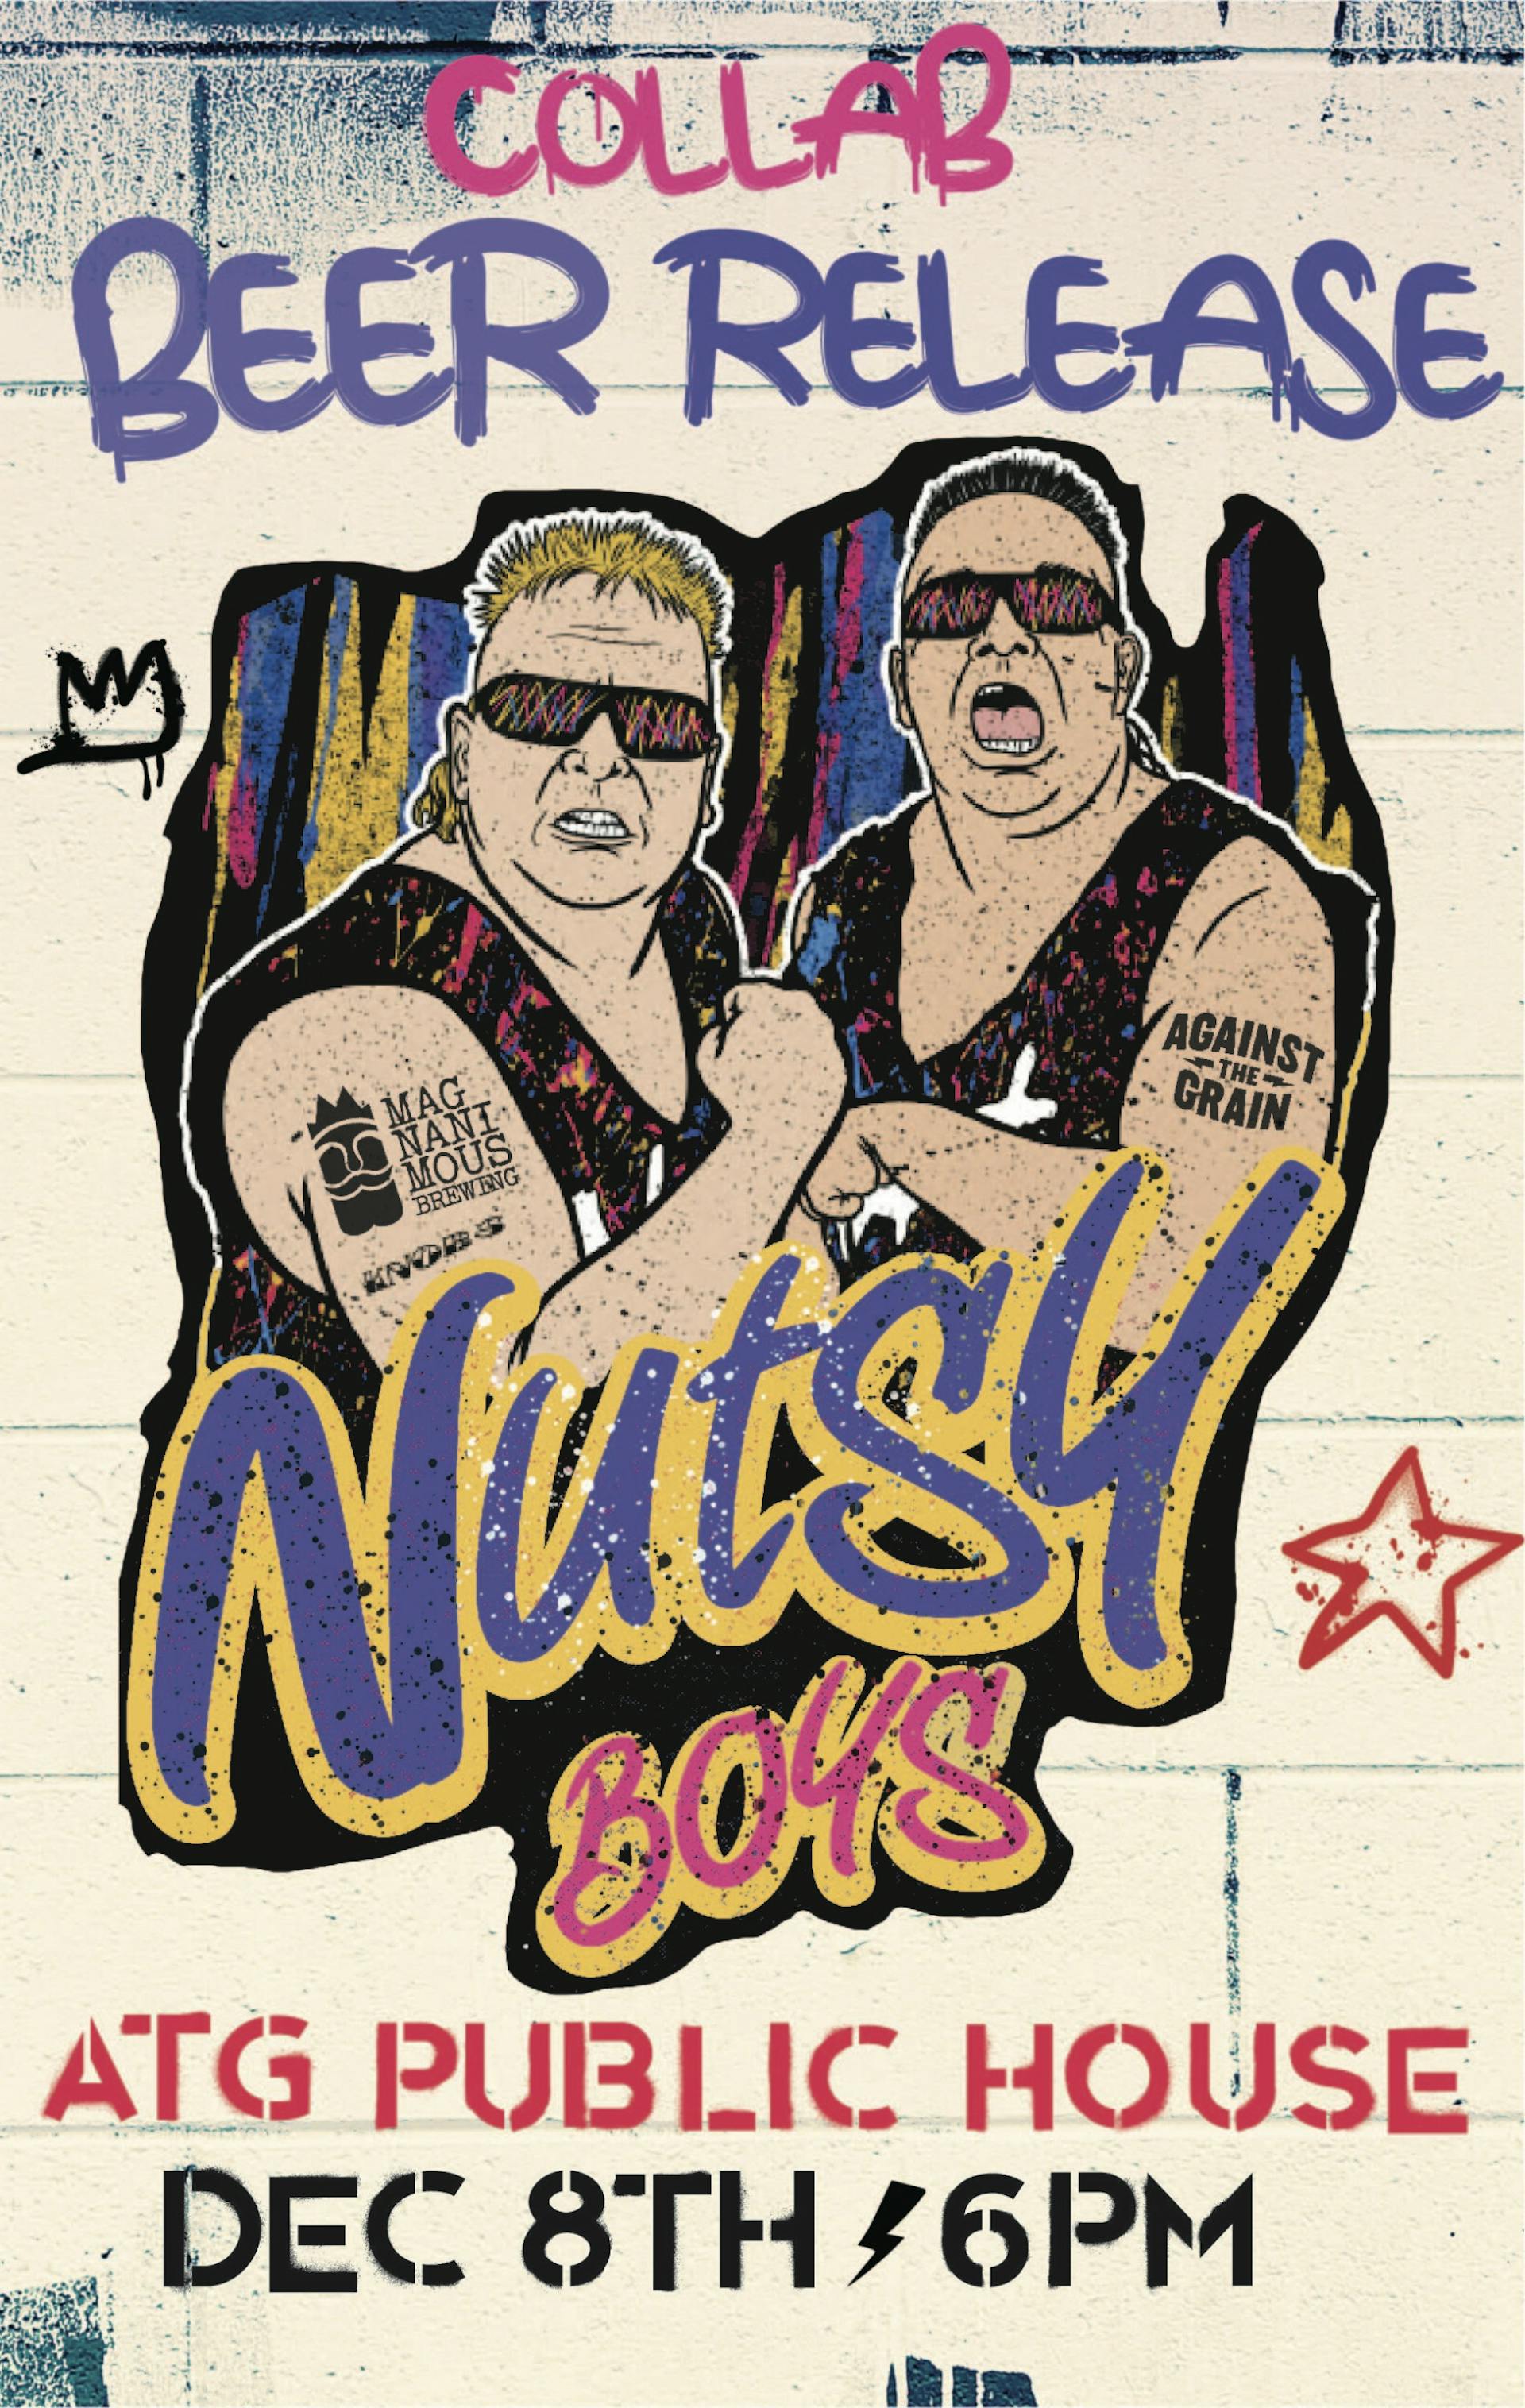 The Nutsy Boys